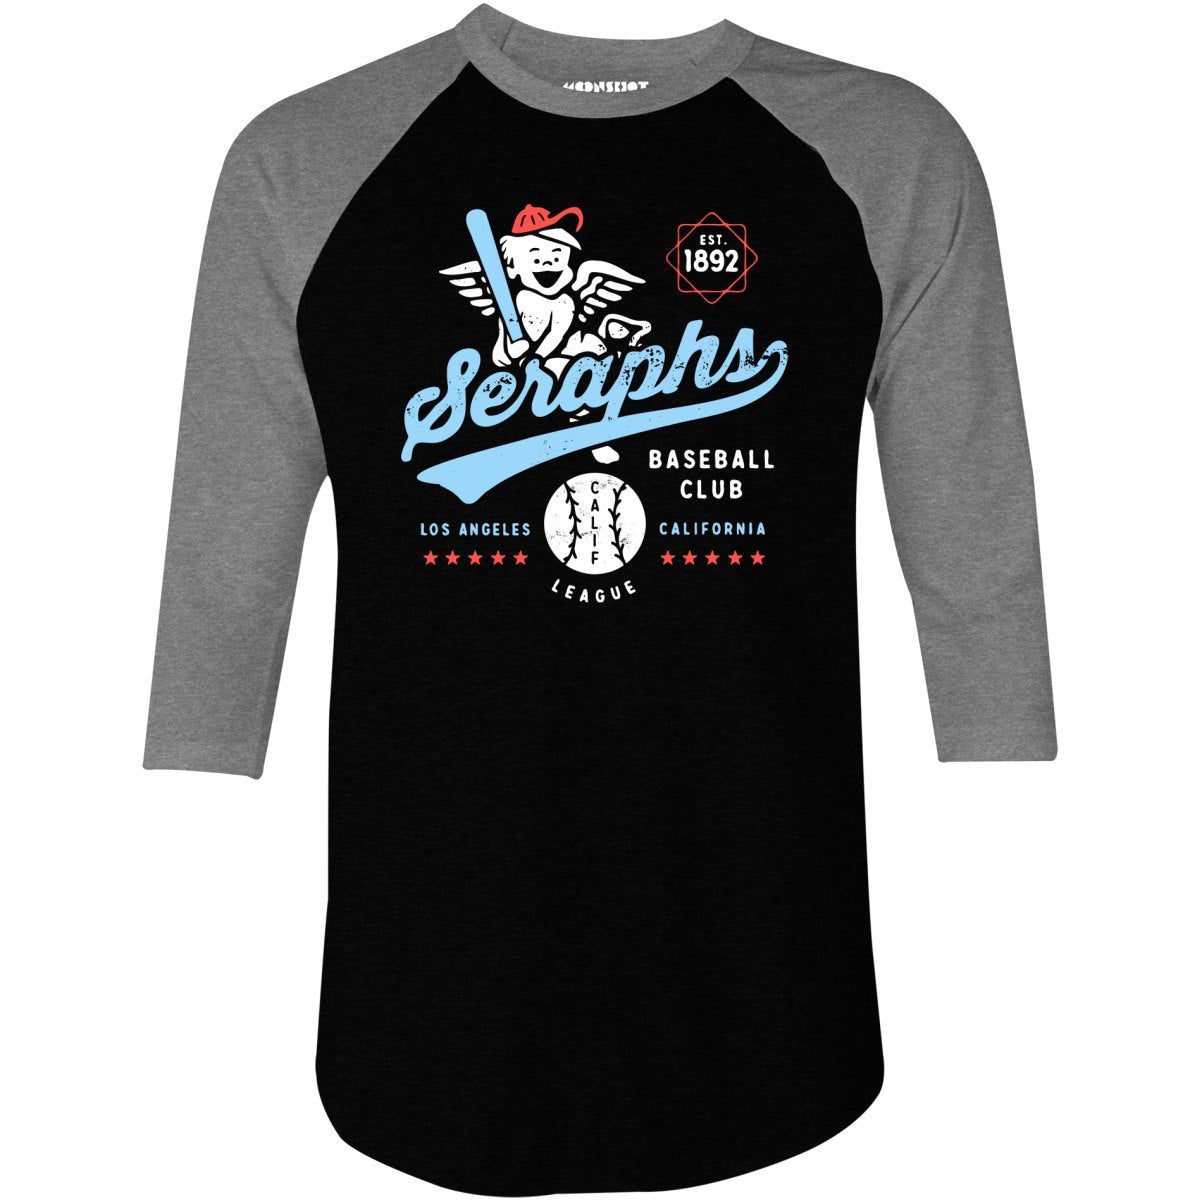 Los Angeles Seraphs - California - Vintage Defunct Baseball Teams - 3/4 Sleeve Raglan T-Shirt